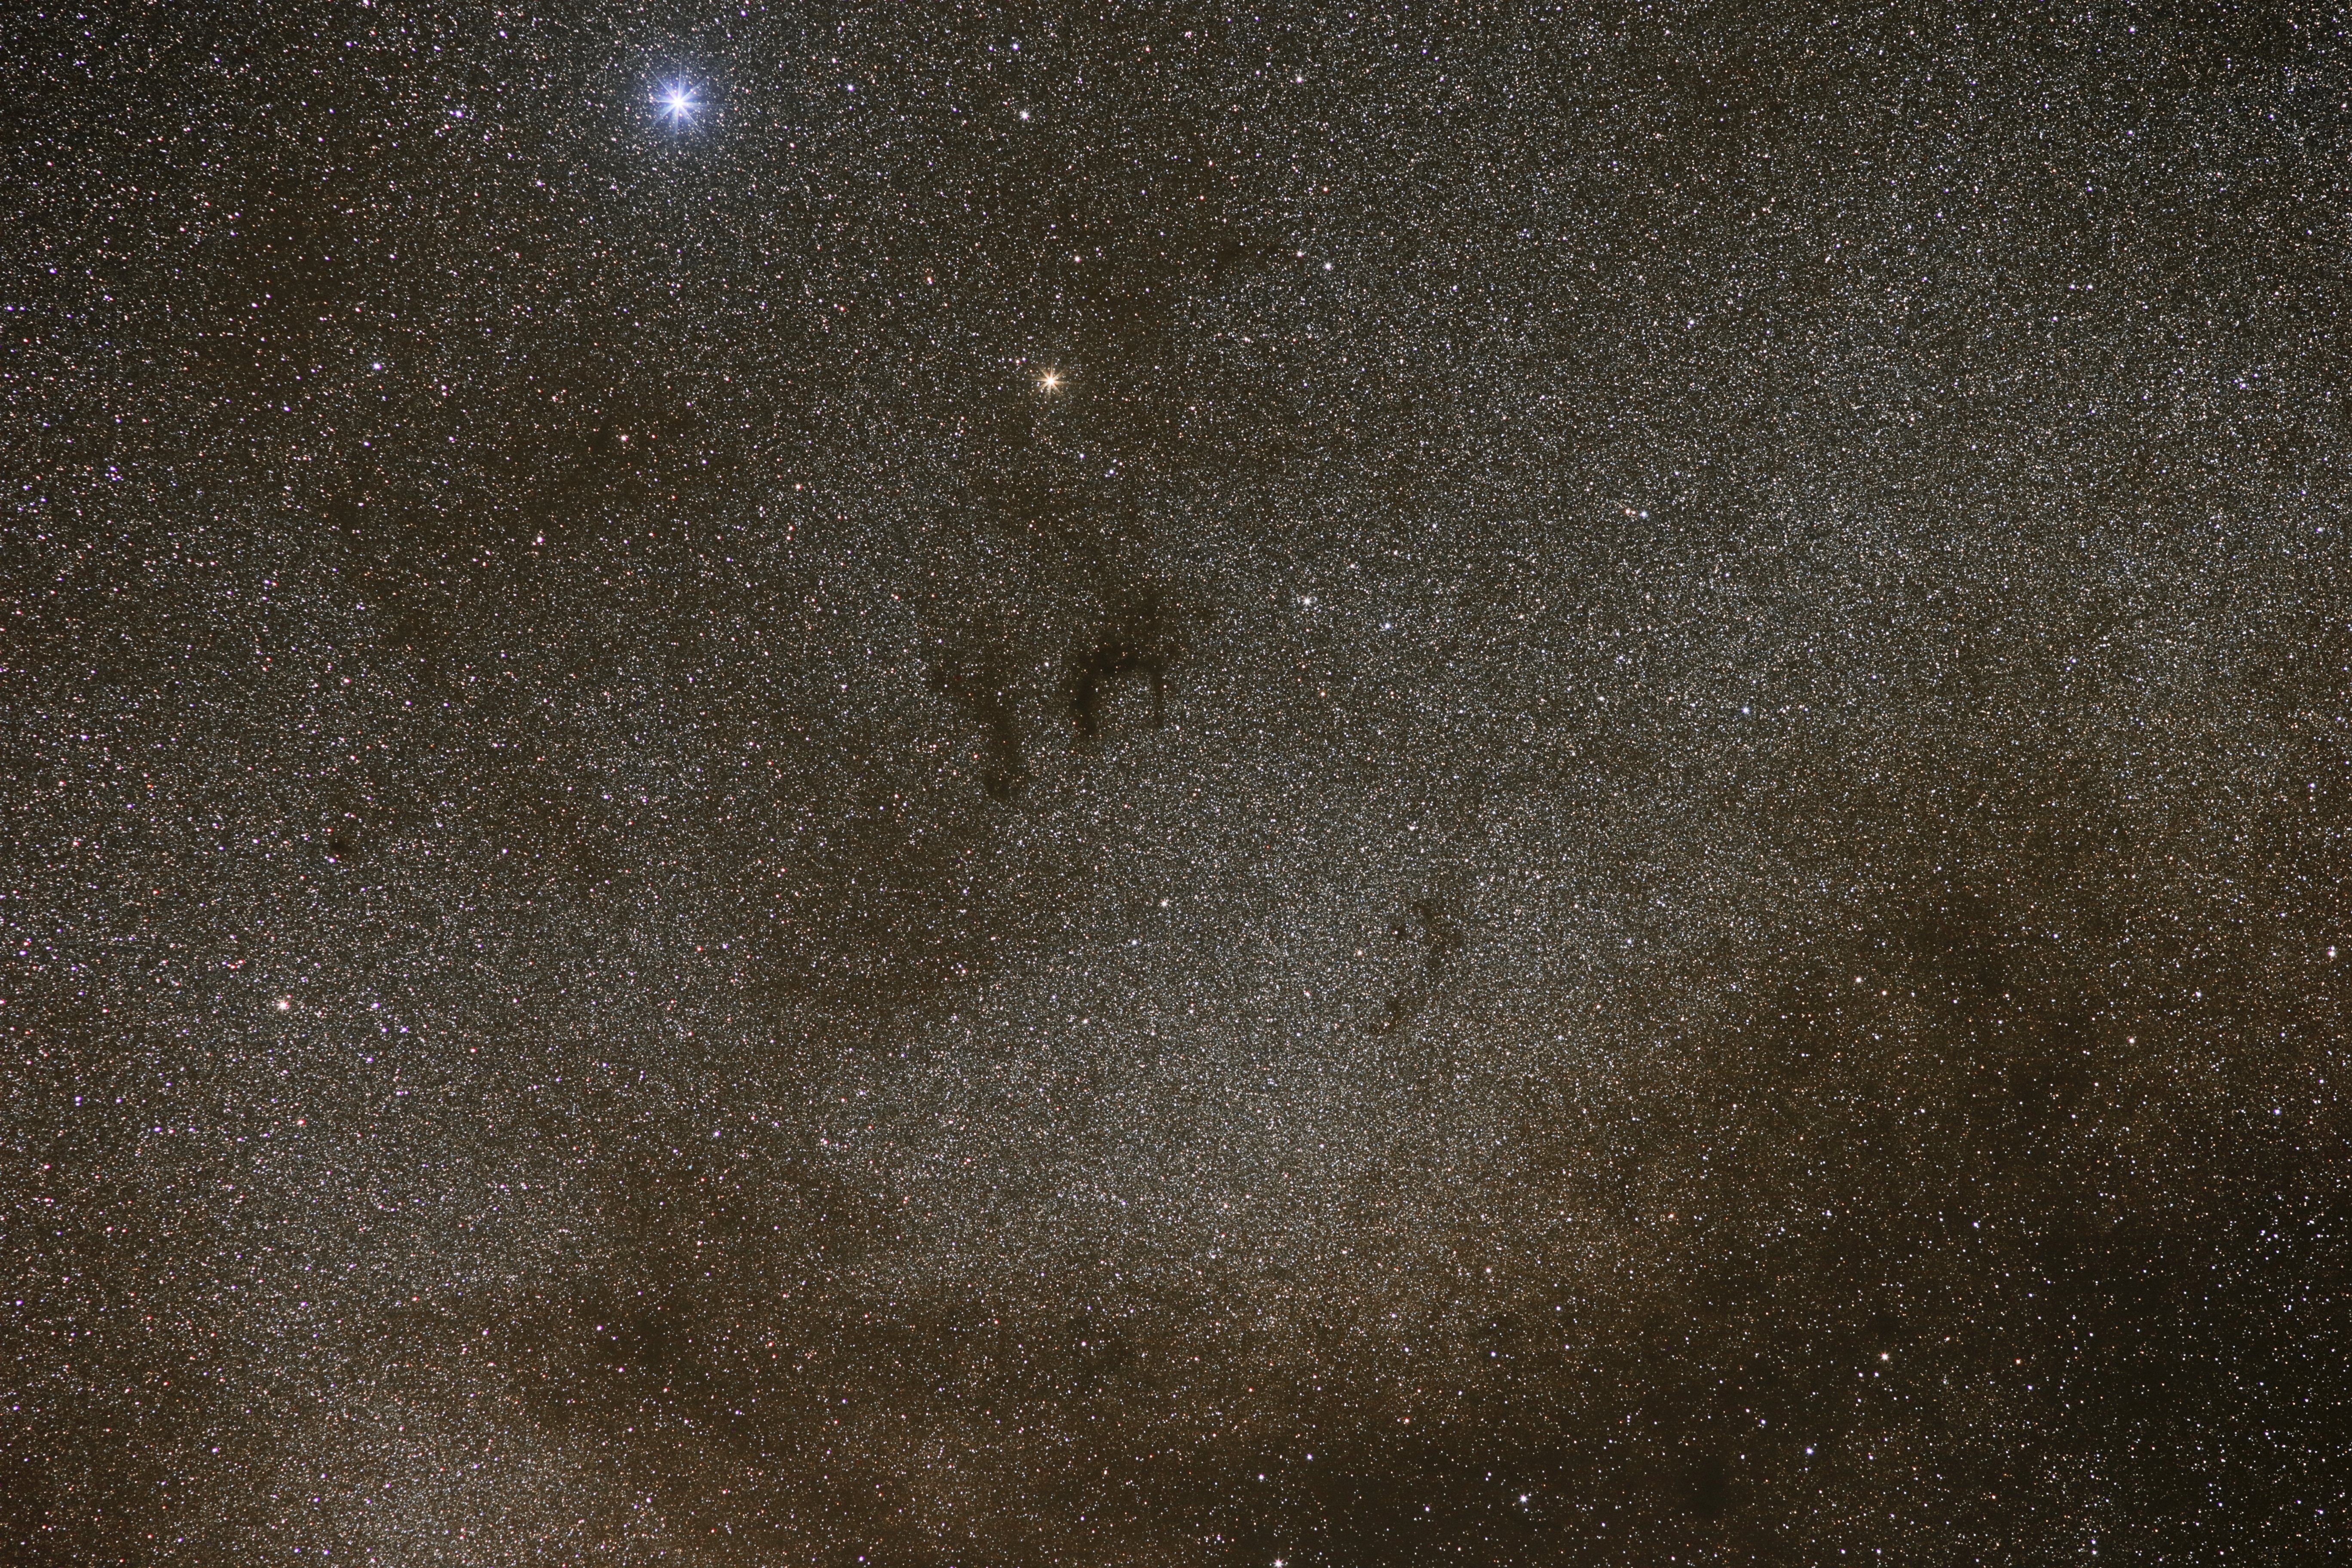 Barnard 142/143 (Aql), Widefield